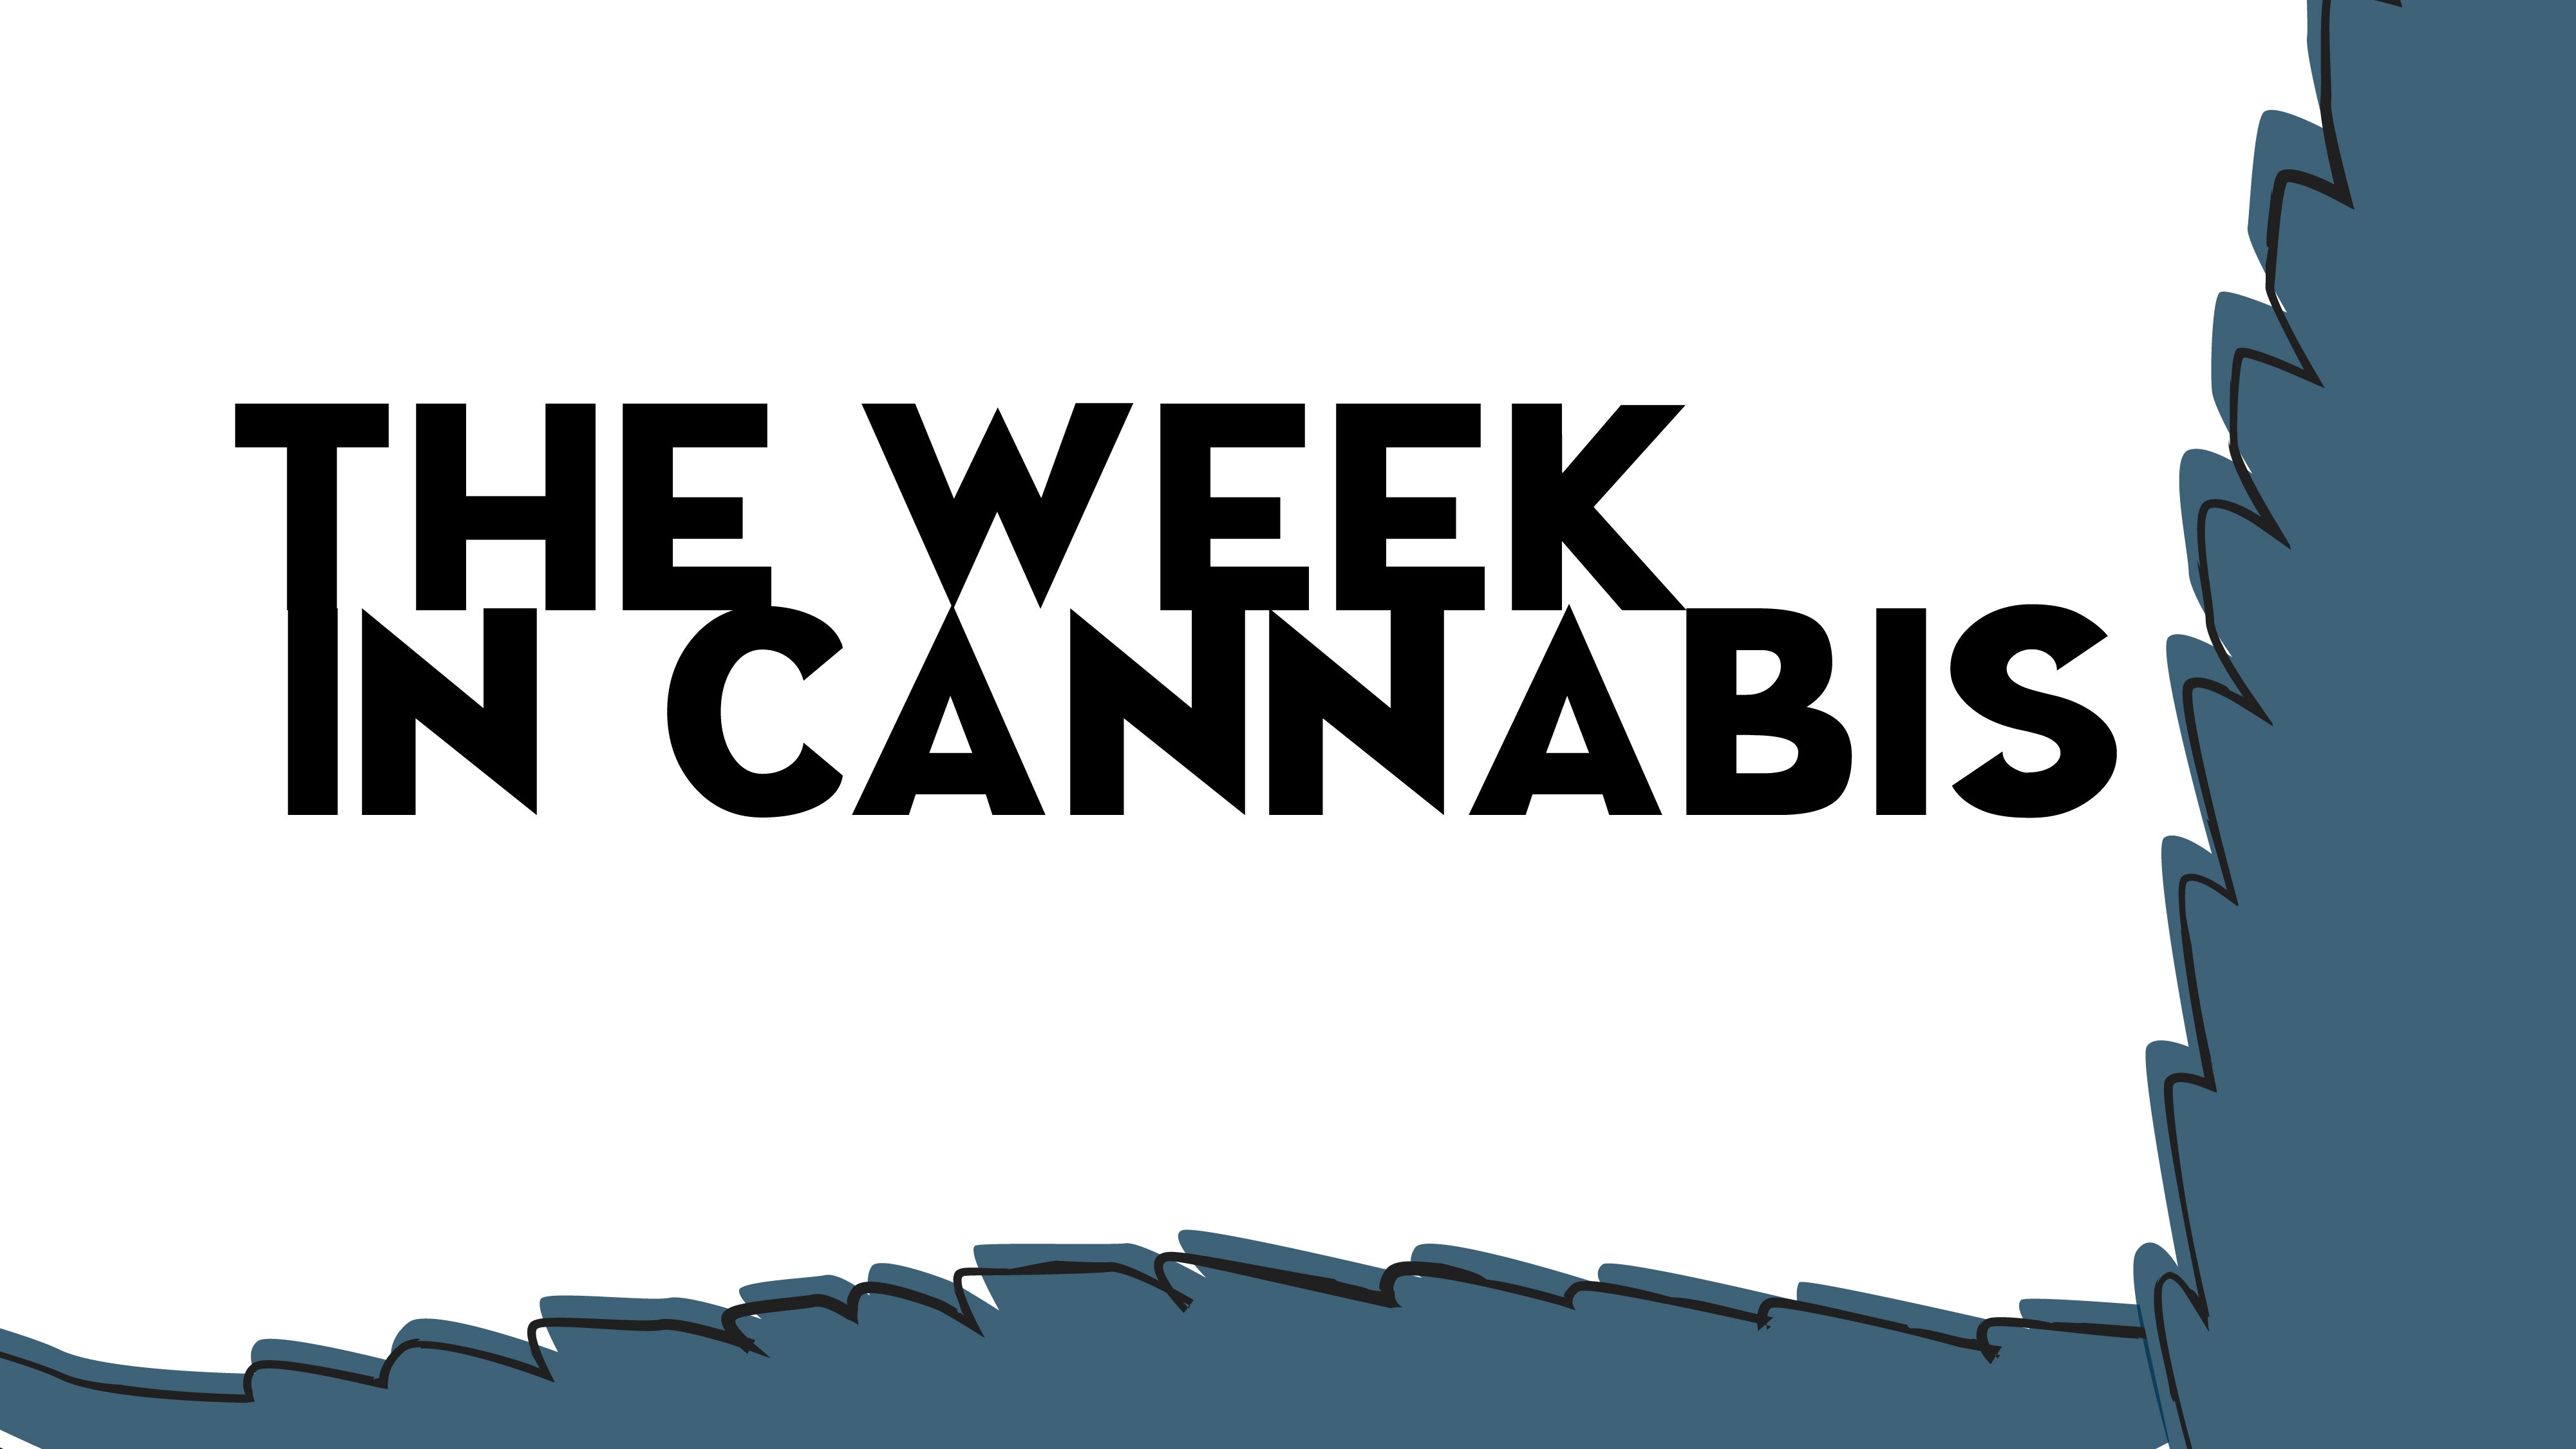 The Week In Cannabis: Coronavirus Drop, Major Financing Agreements, Psychedelics Getting Hot